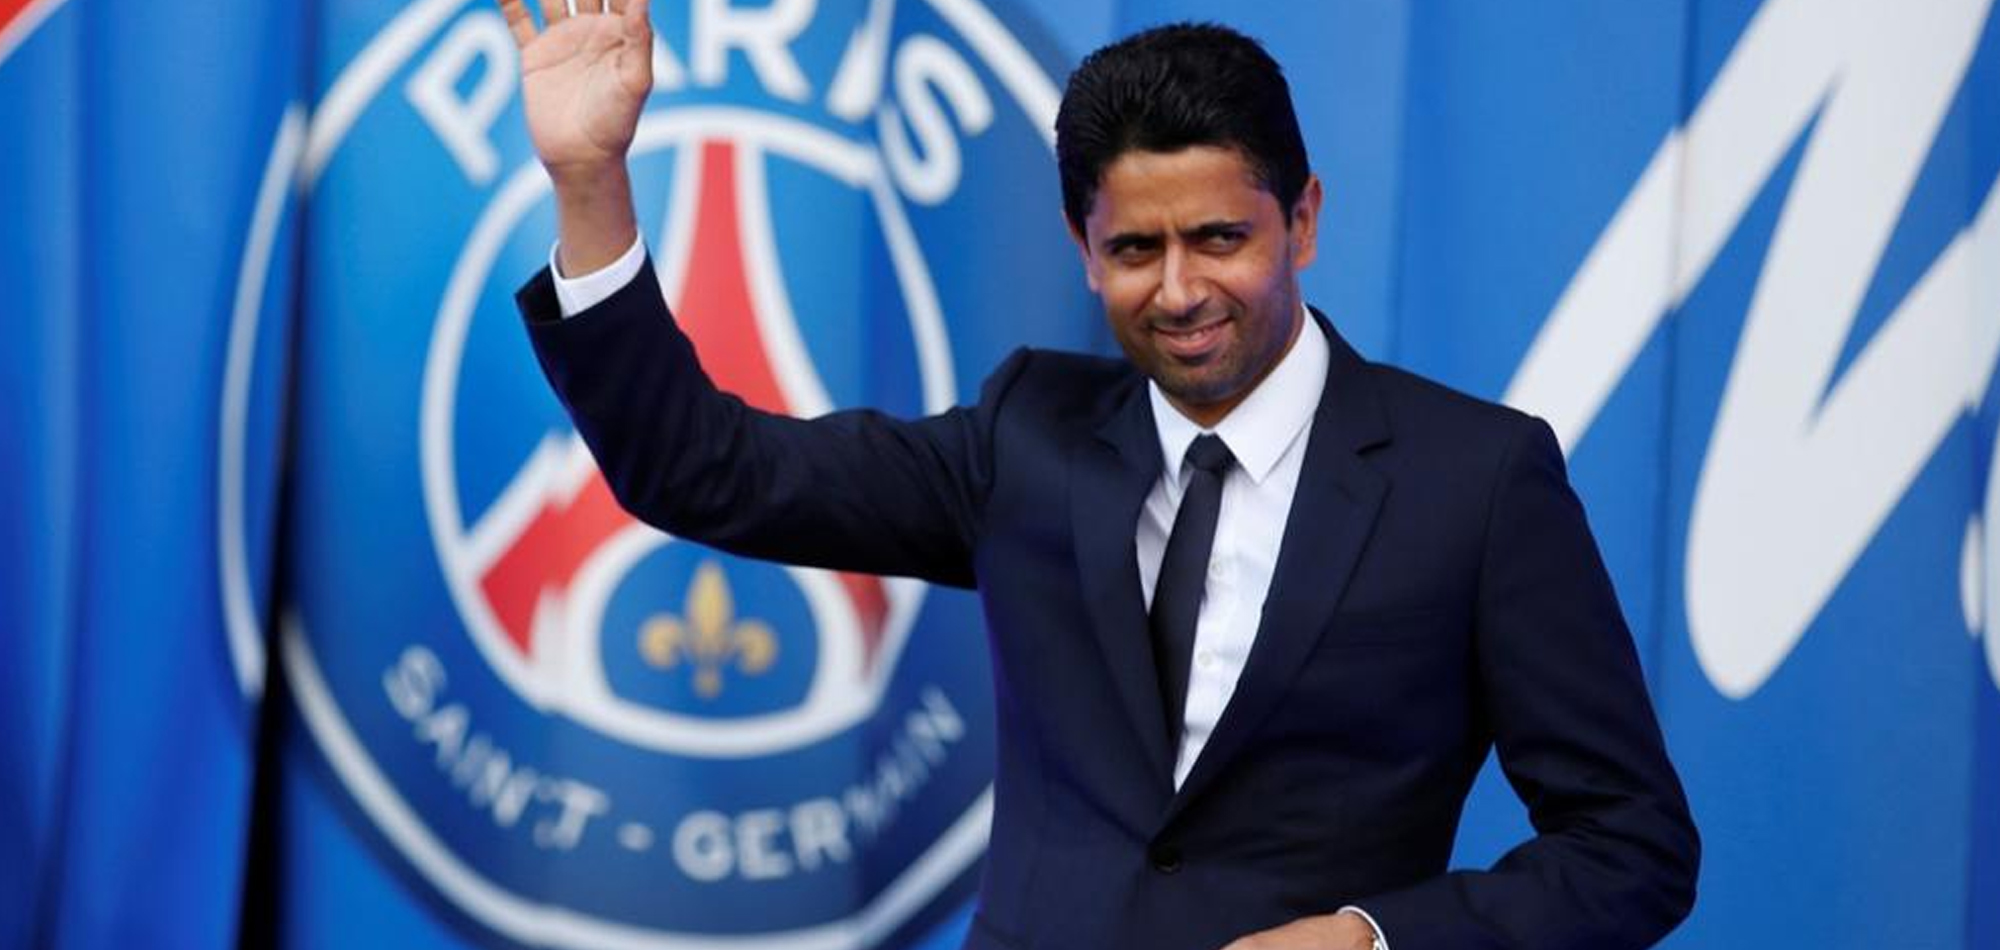 European Club Association appoints Paris Saint-Germain’s Nasser Al-Khelaifi as Chairman